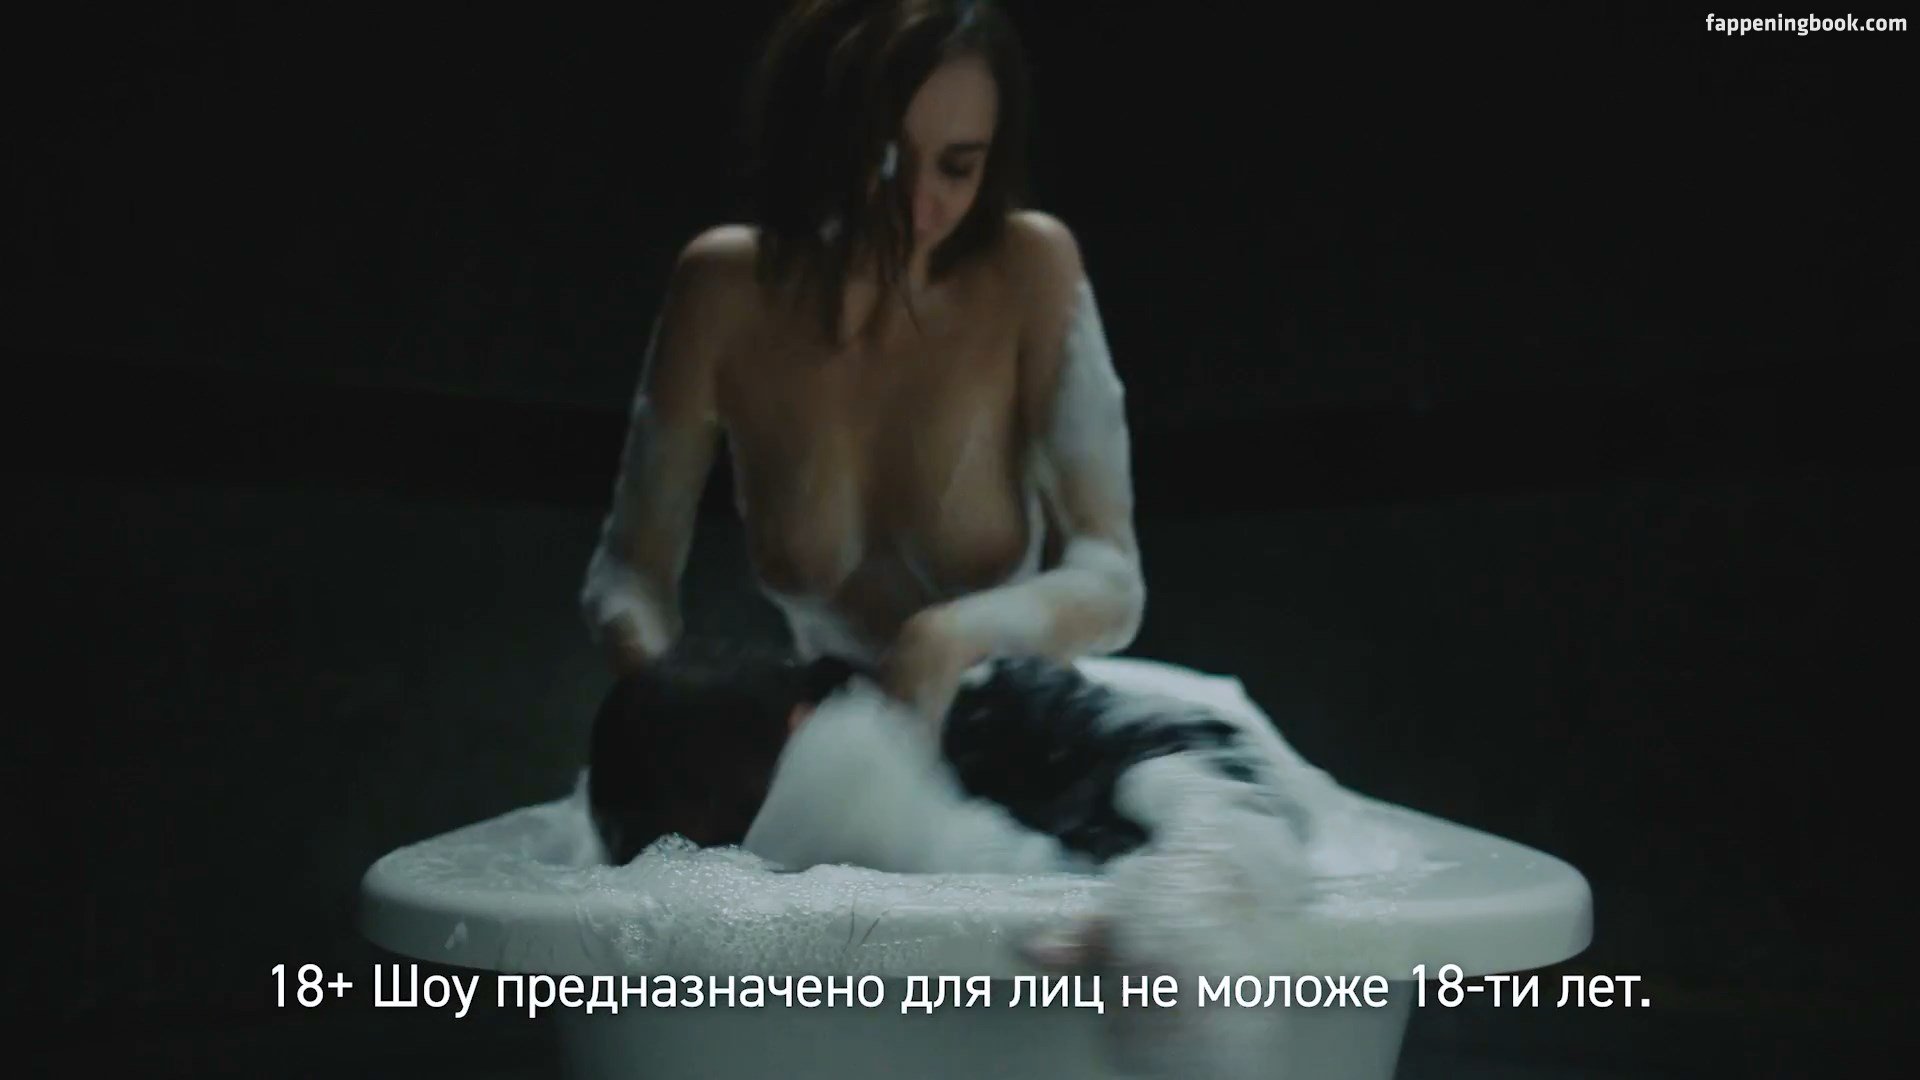 About Sofia Sinitsyna Nude. 